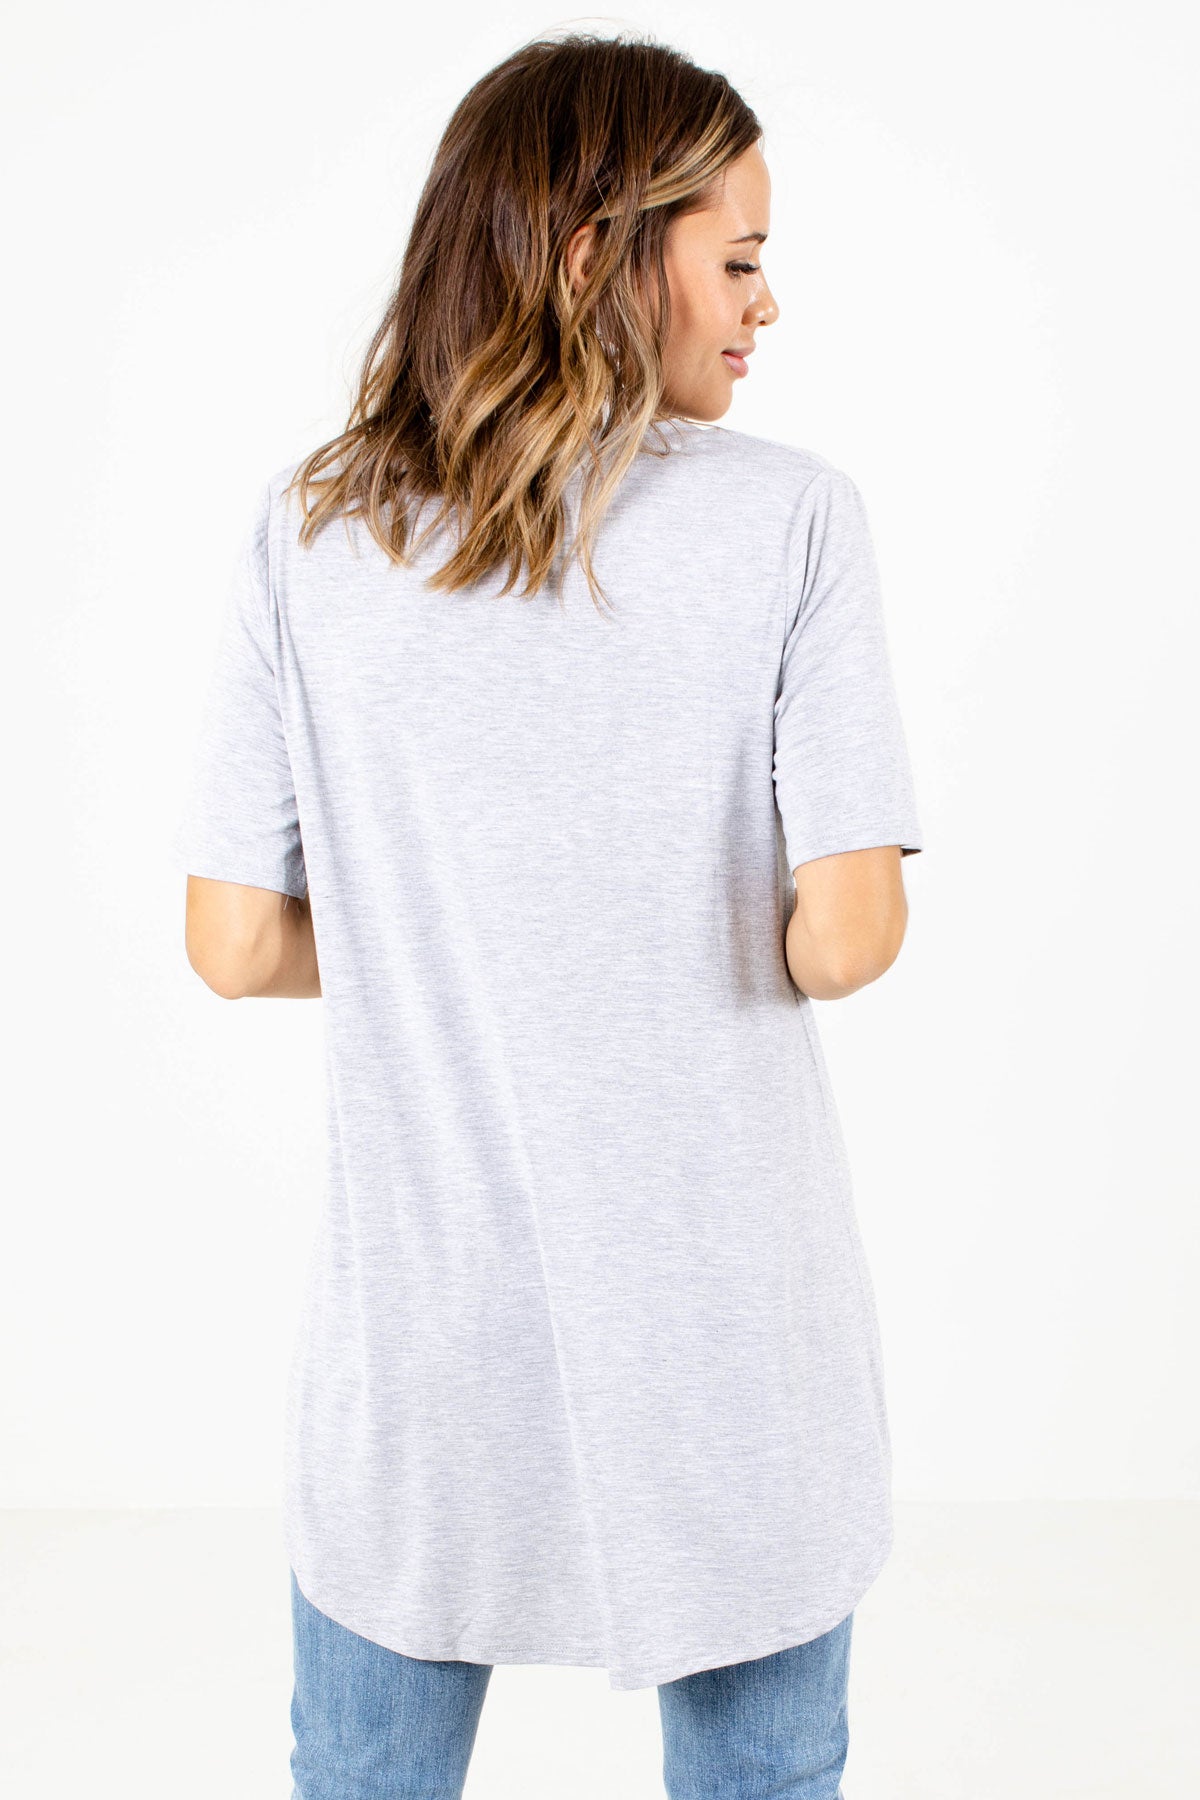 Women's Gray Short Sleeve Boutique Tops